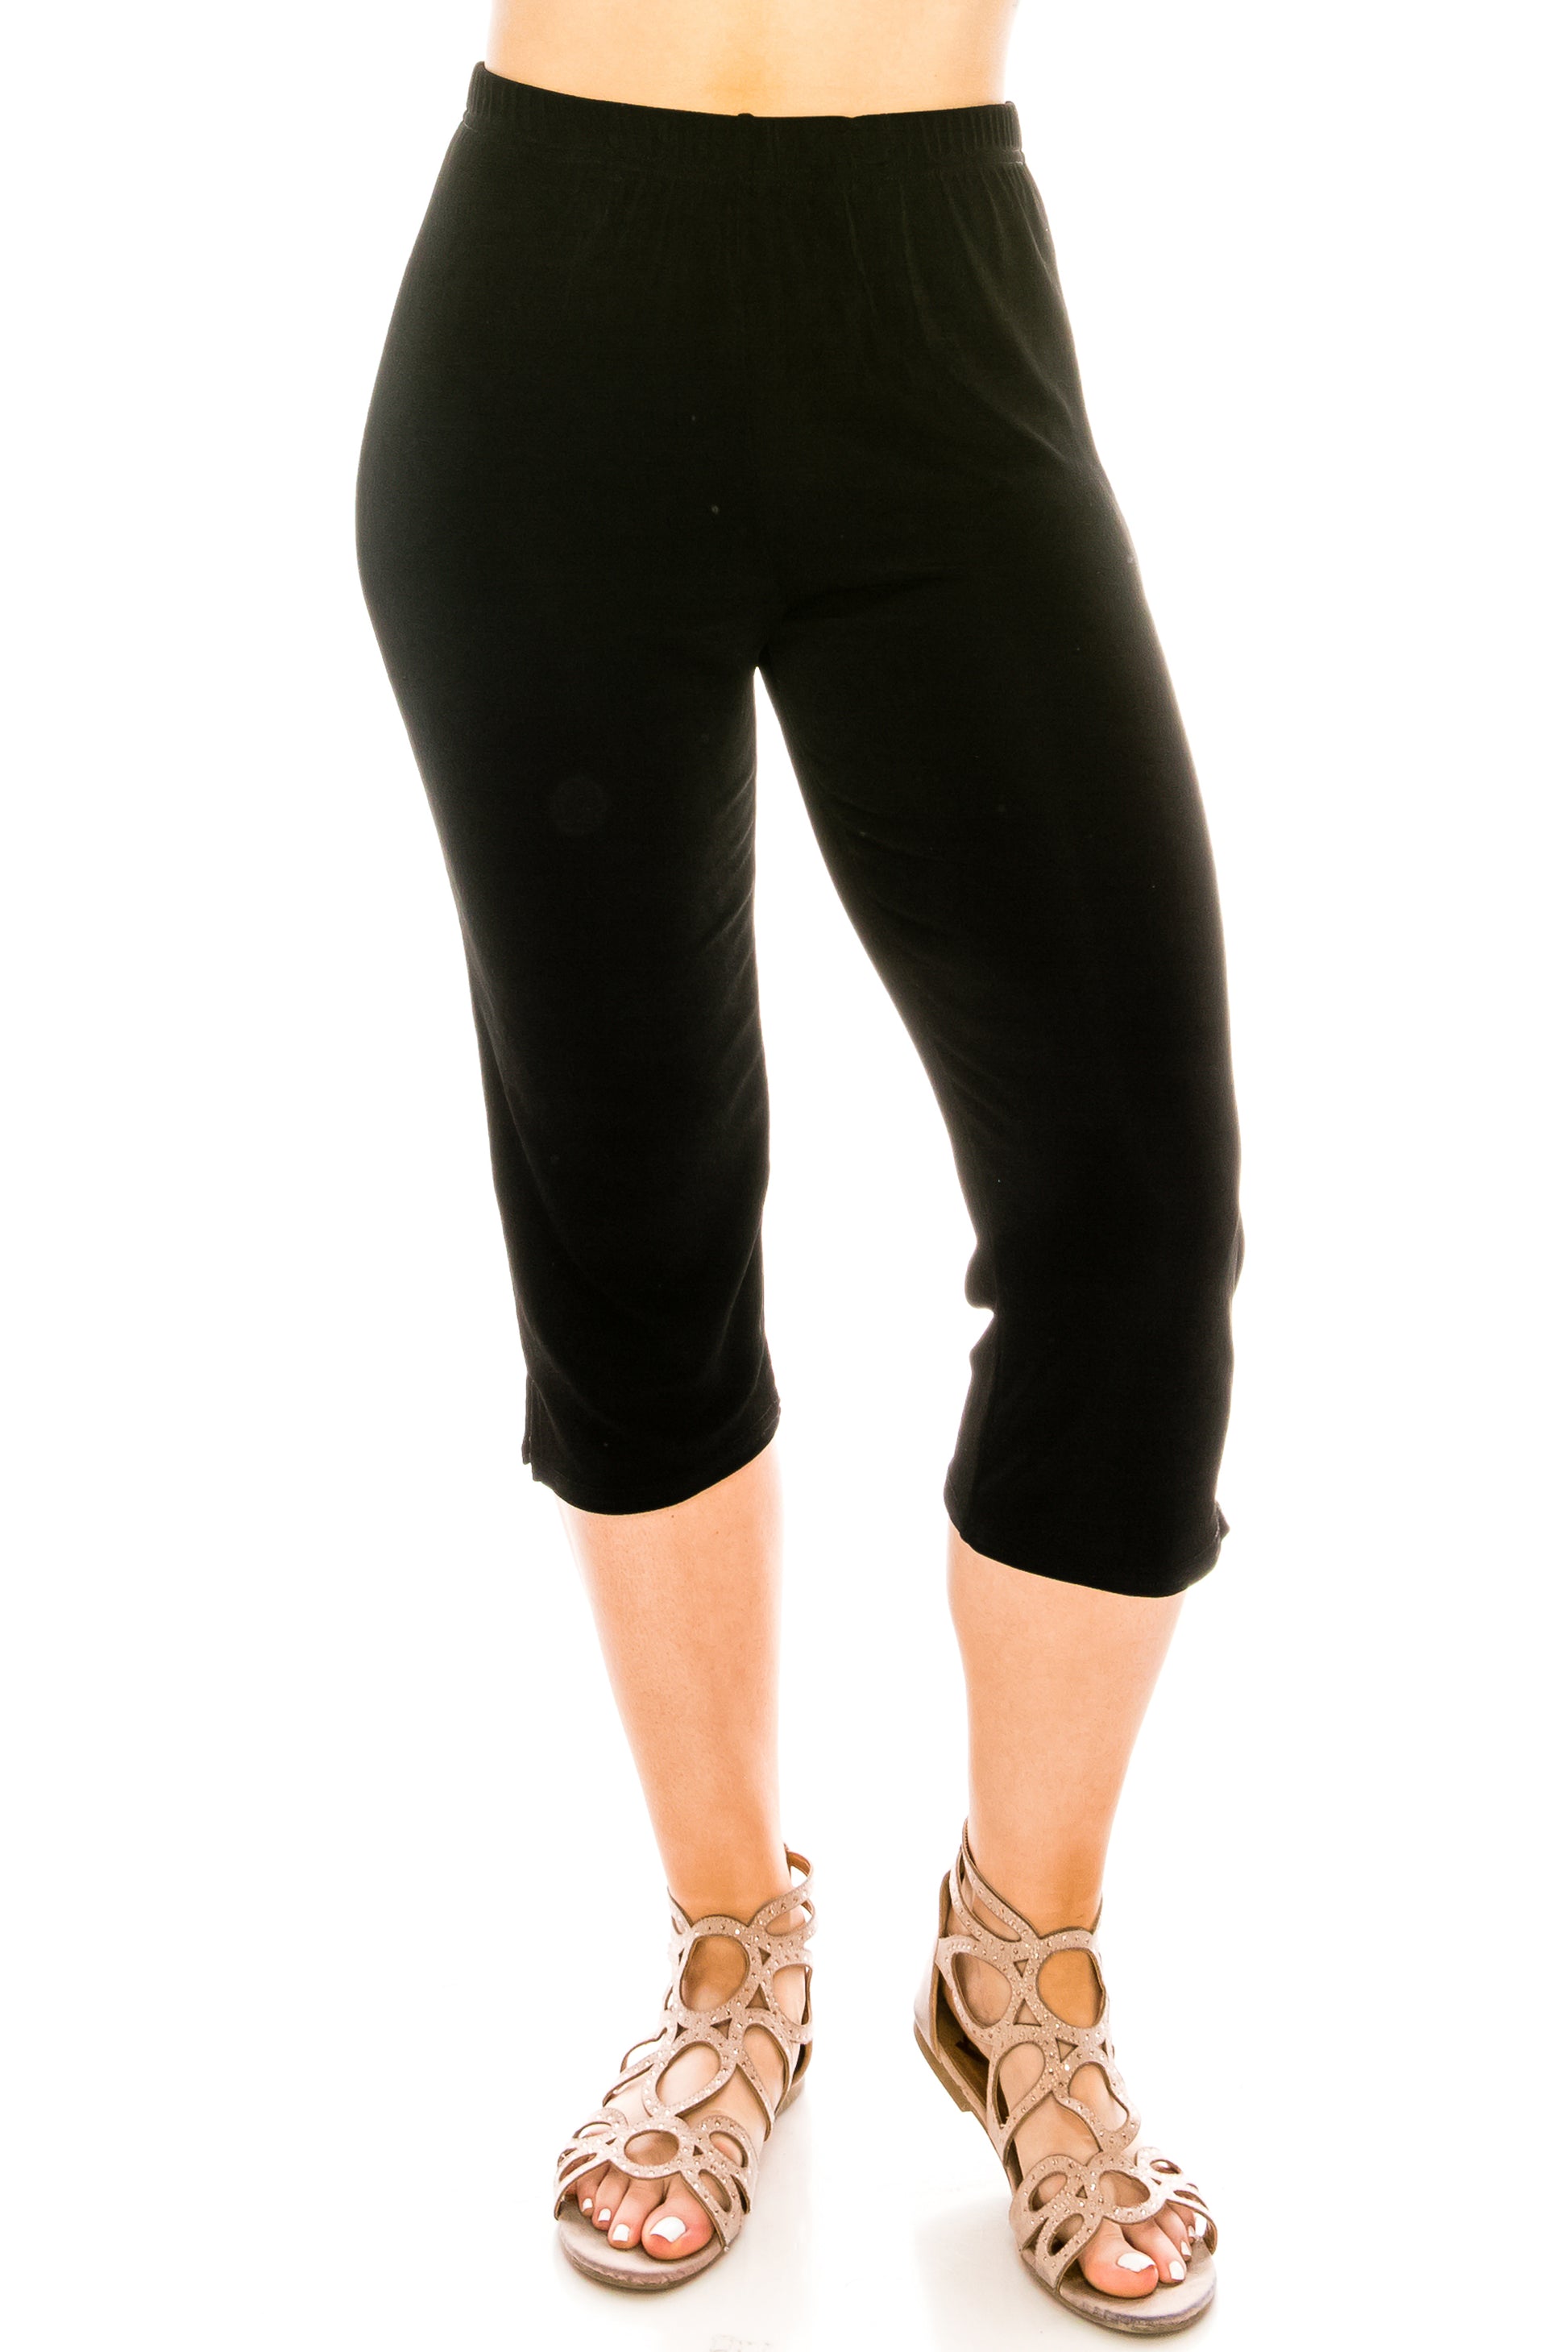 Jostar Women's Non Iron Capri Pants, 502AY - Jostar Online